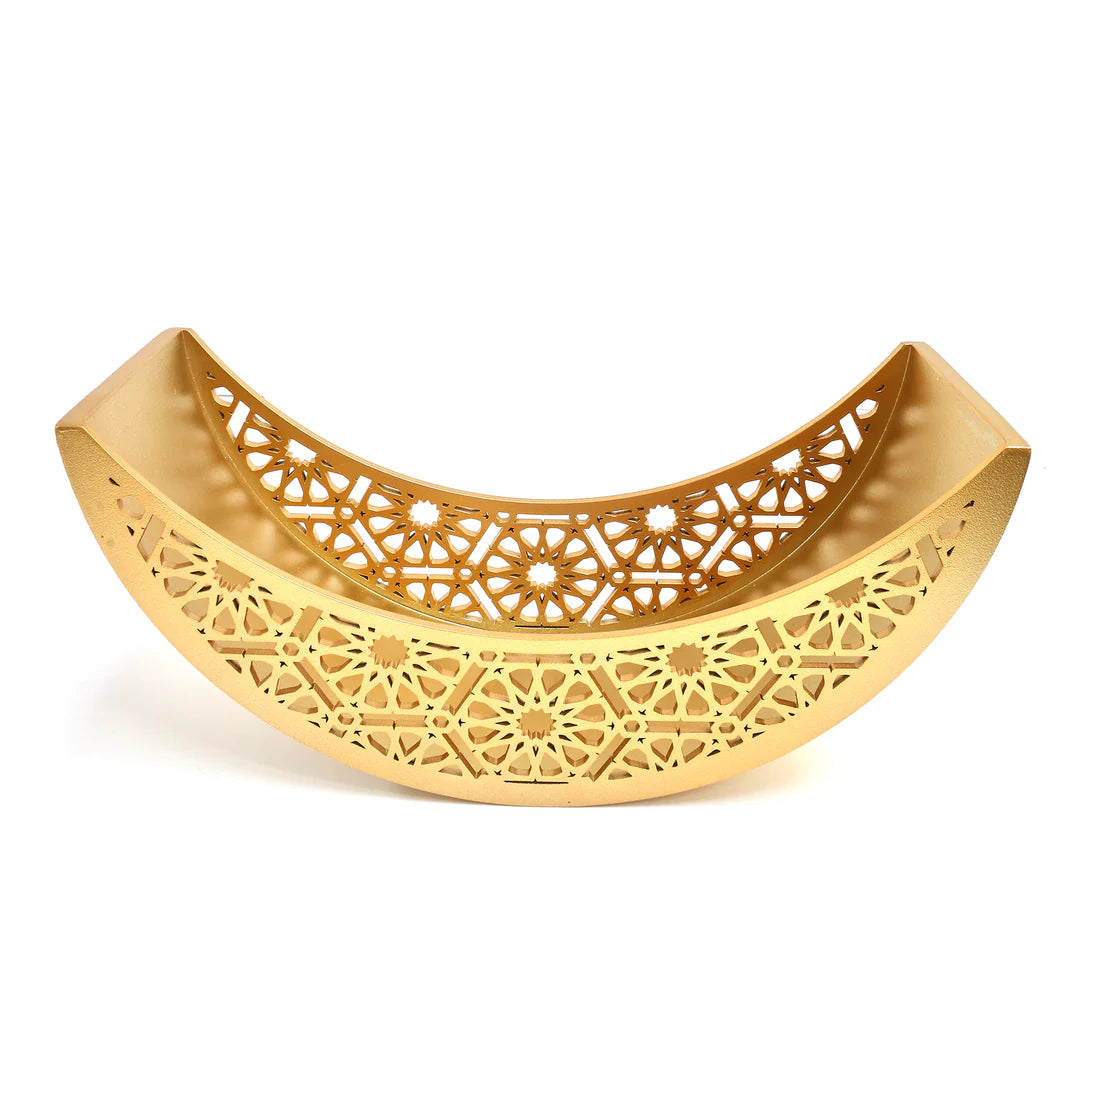 Gold Crescent Moon Shaped Bowl Cutout Wooden Display Tray